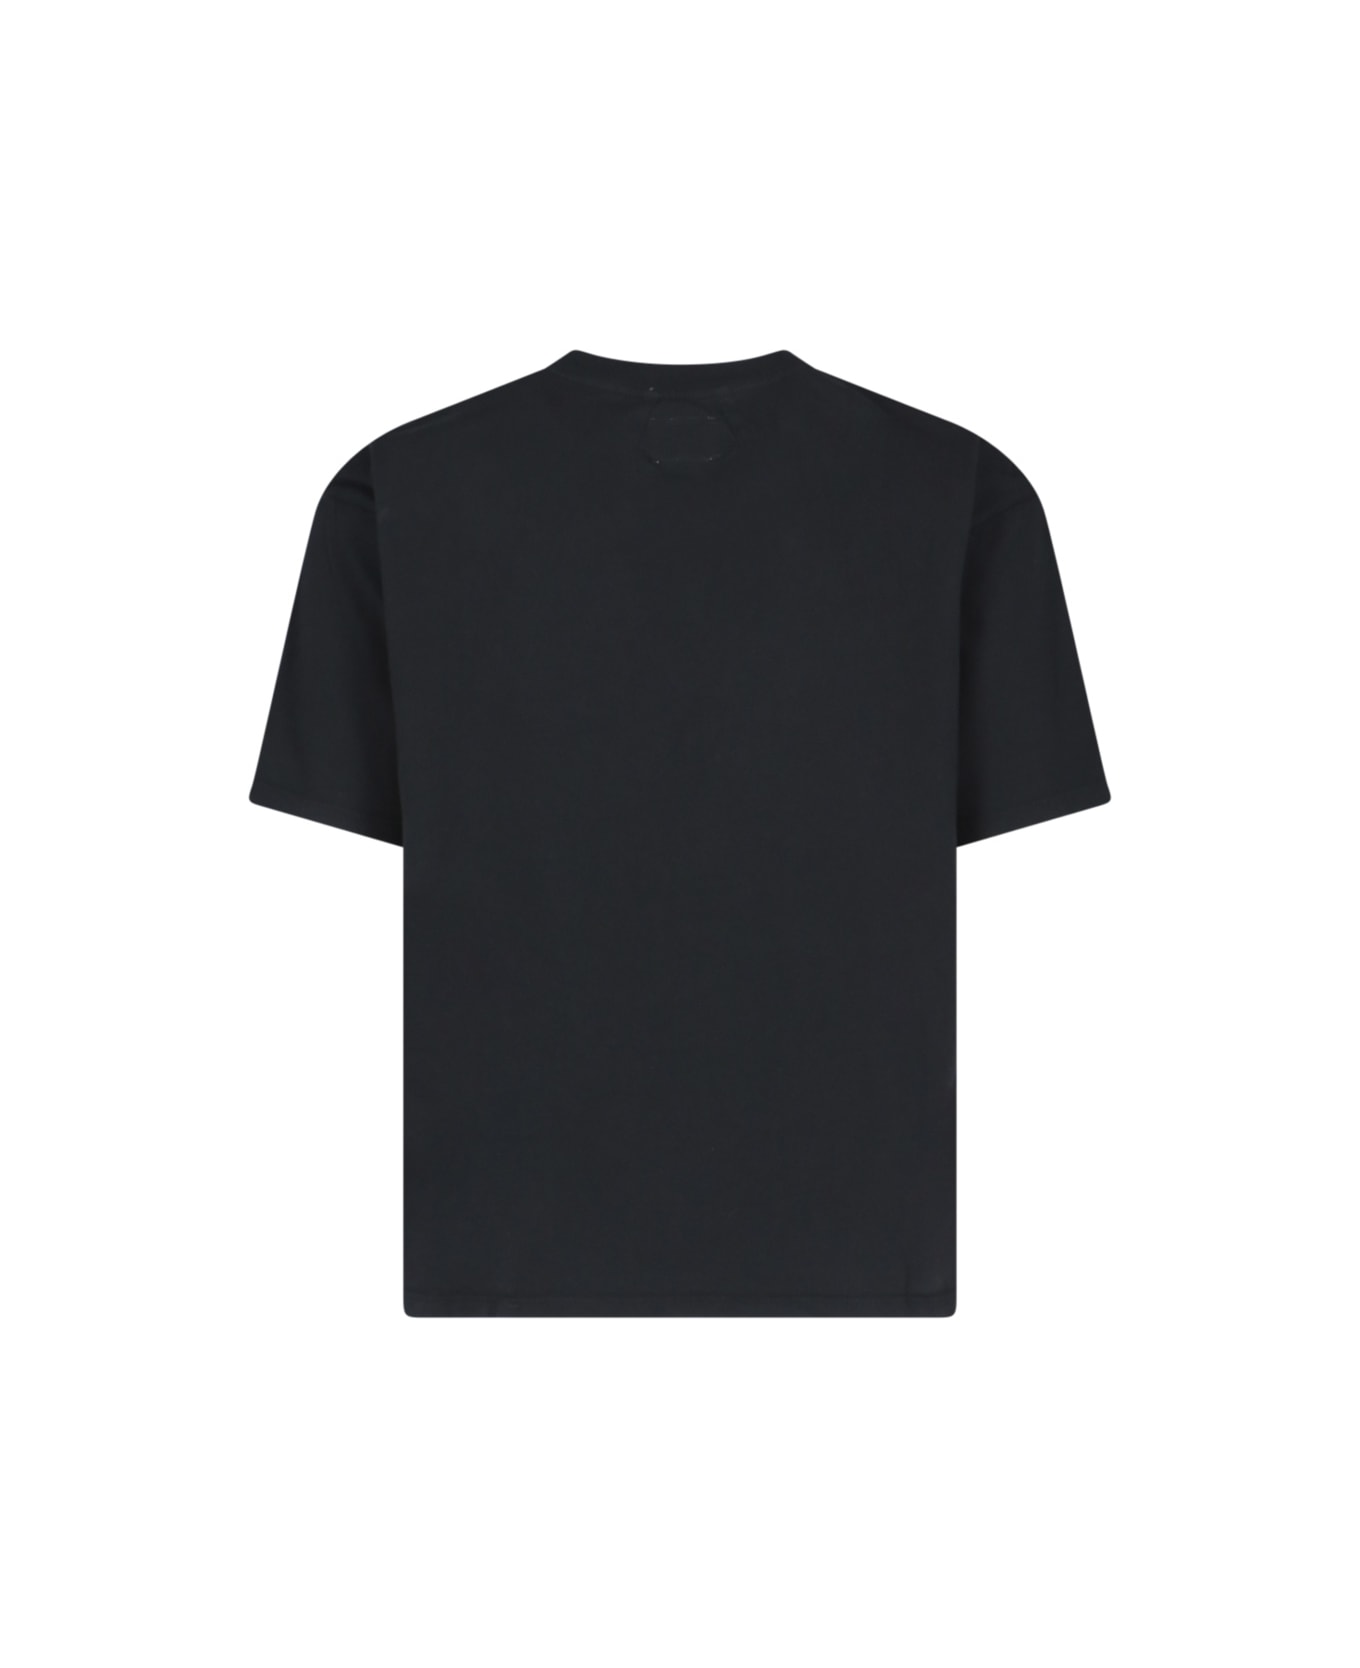 Rhude 'saint Malo' T-shirt - Black   シャツ